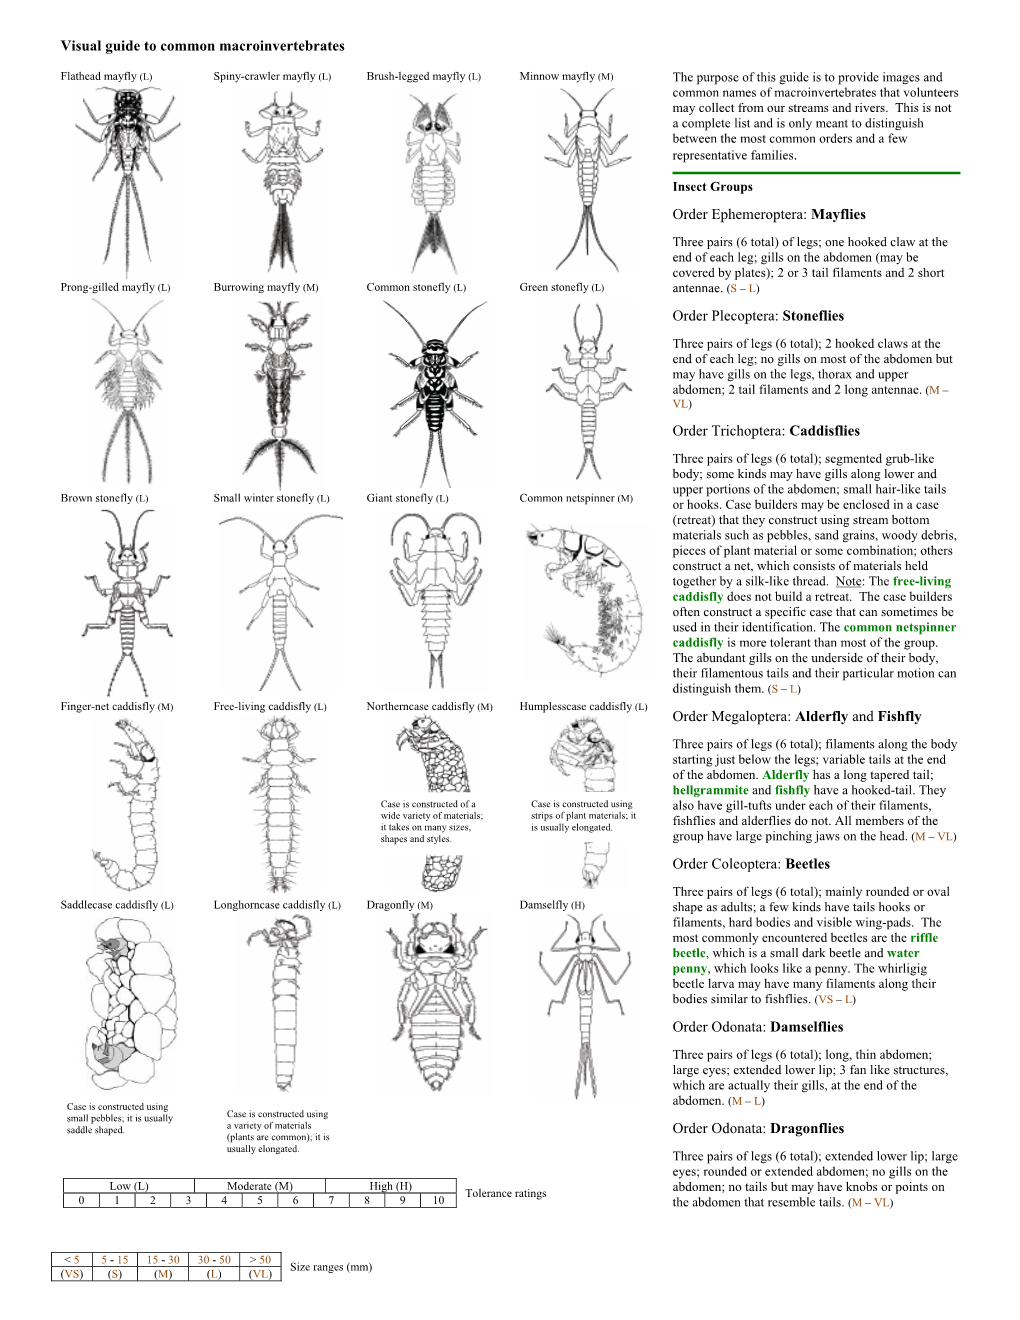 Visual Guide to Common Macroinvertebrates